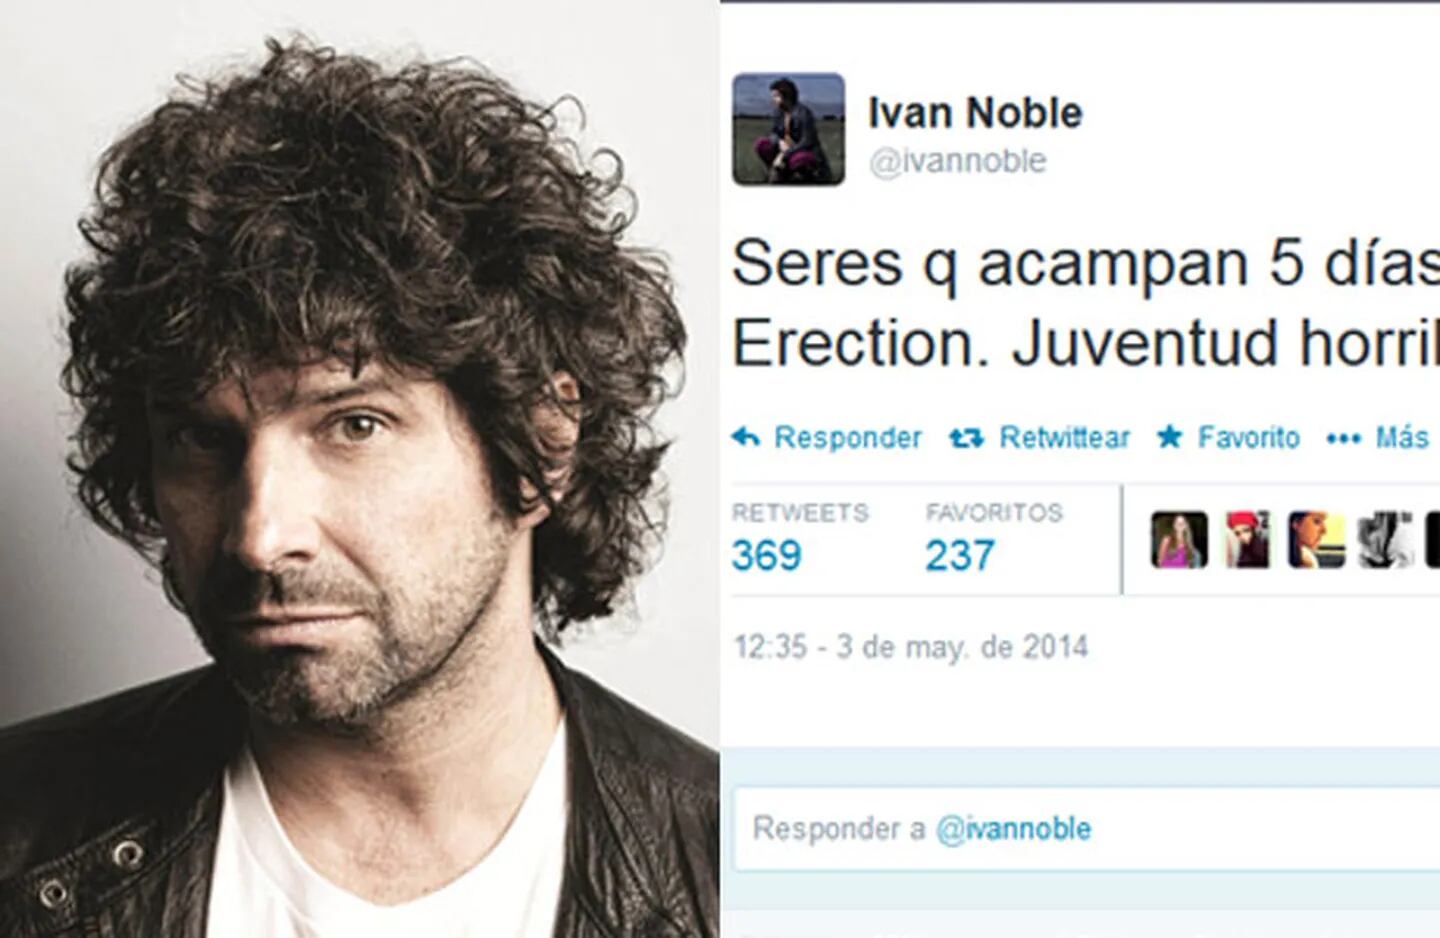 Iván Noble, ácido en Twitter con los fans de One Direction. (Fotos: Web y Twitter)